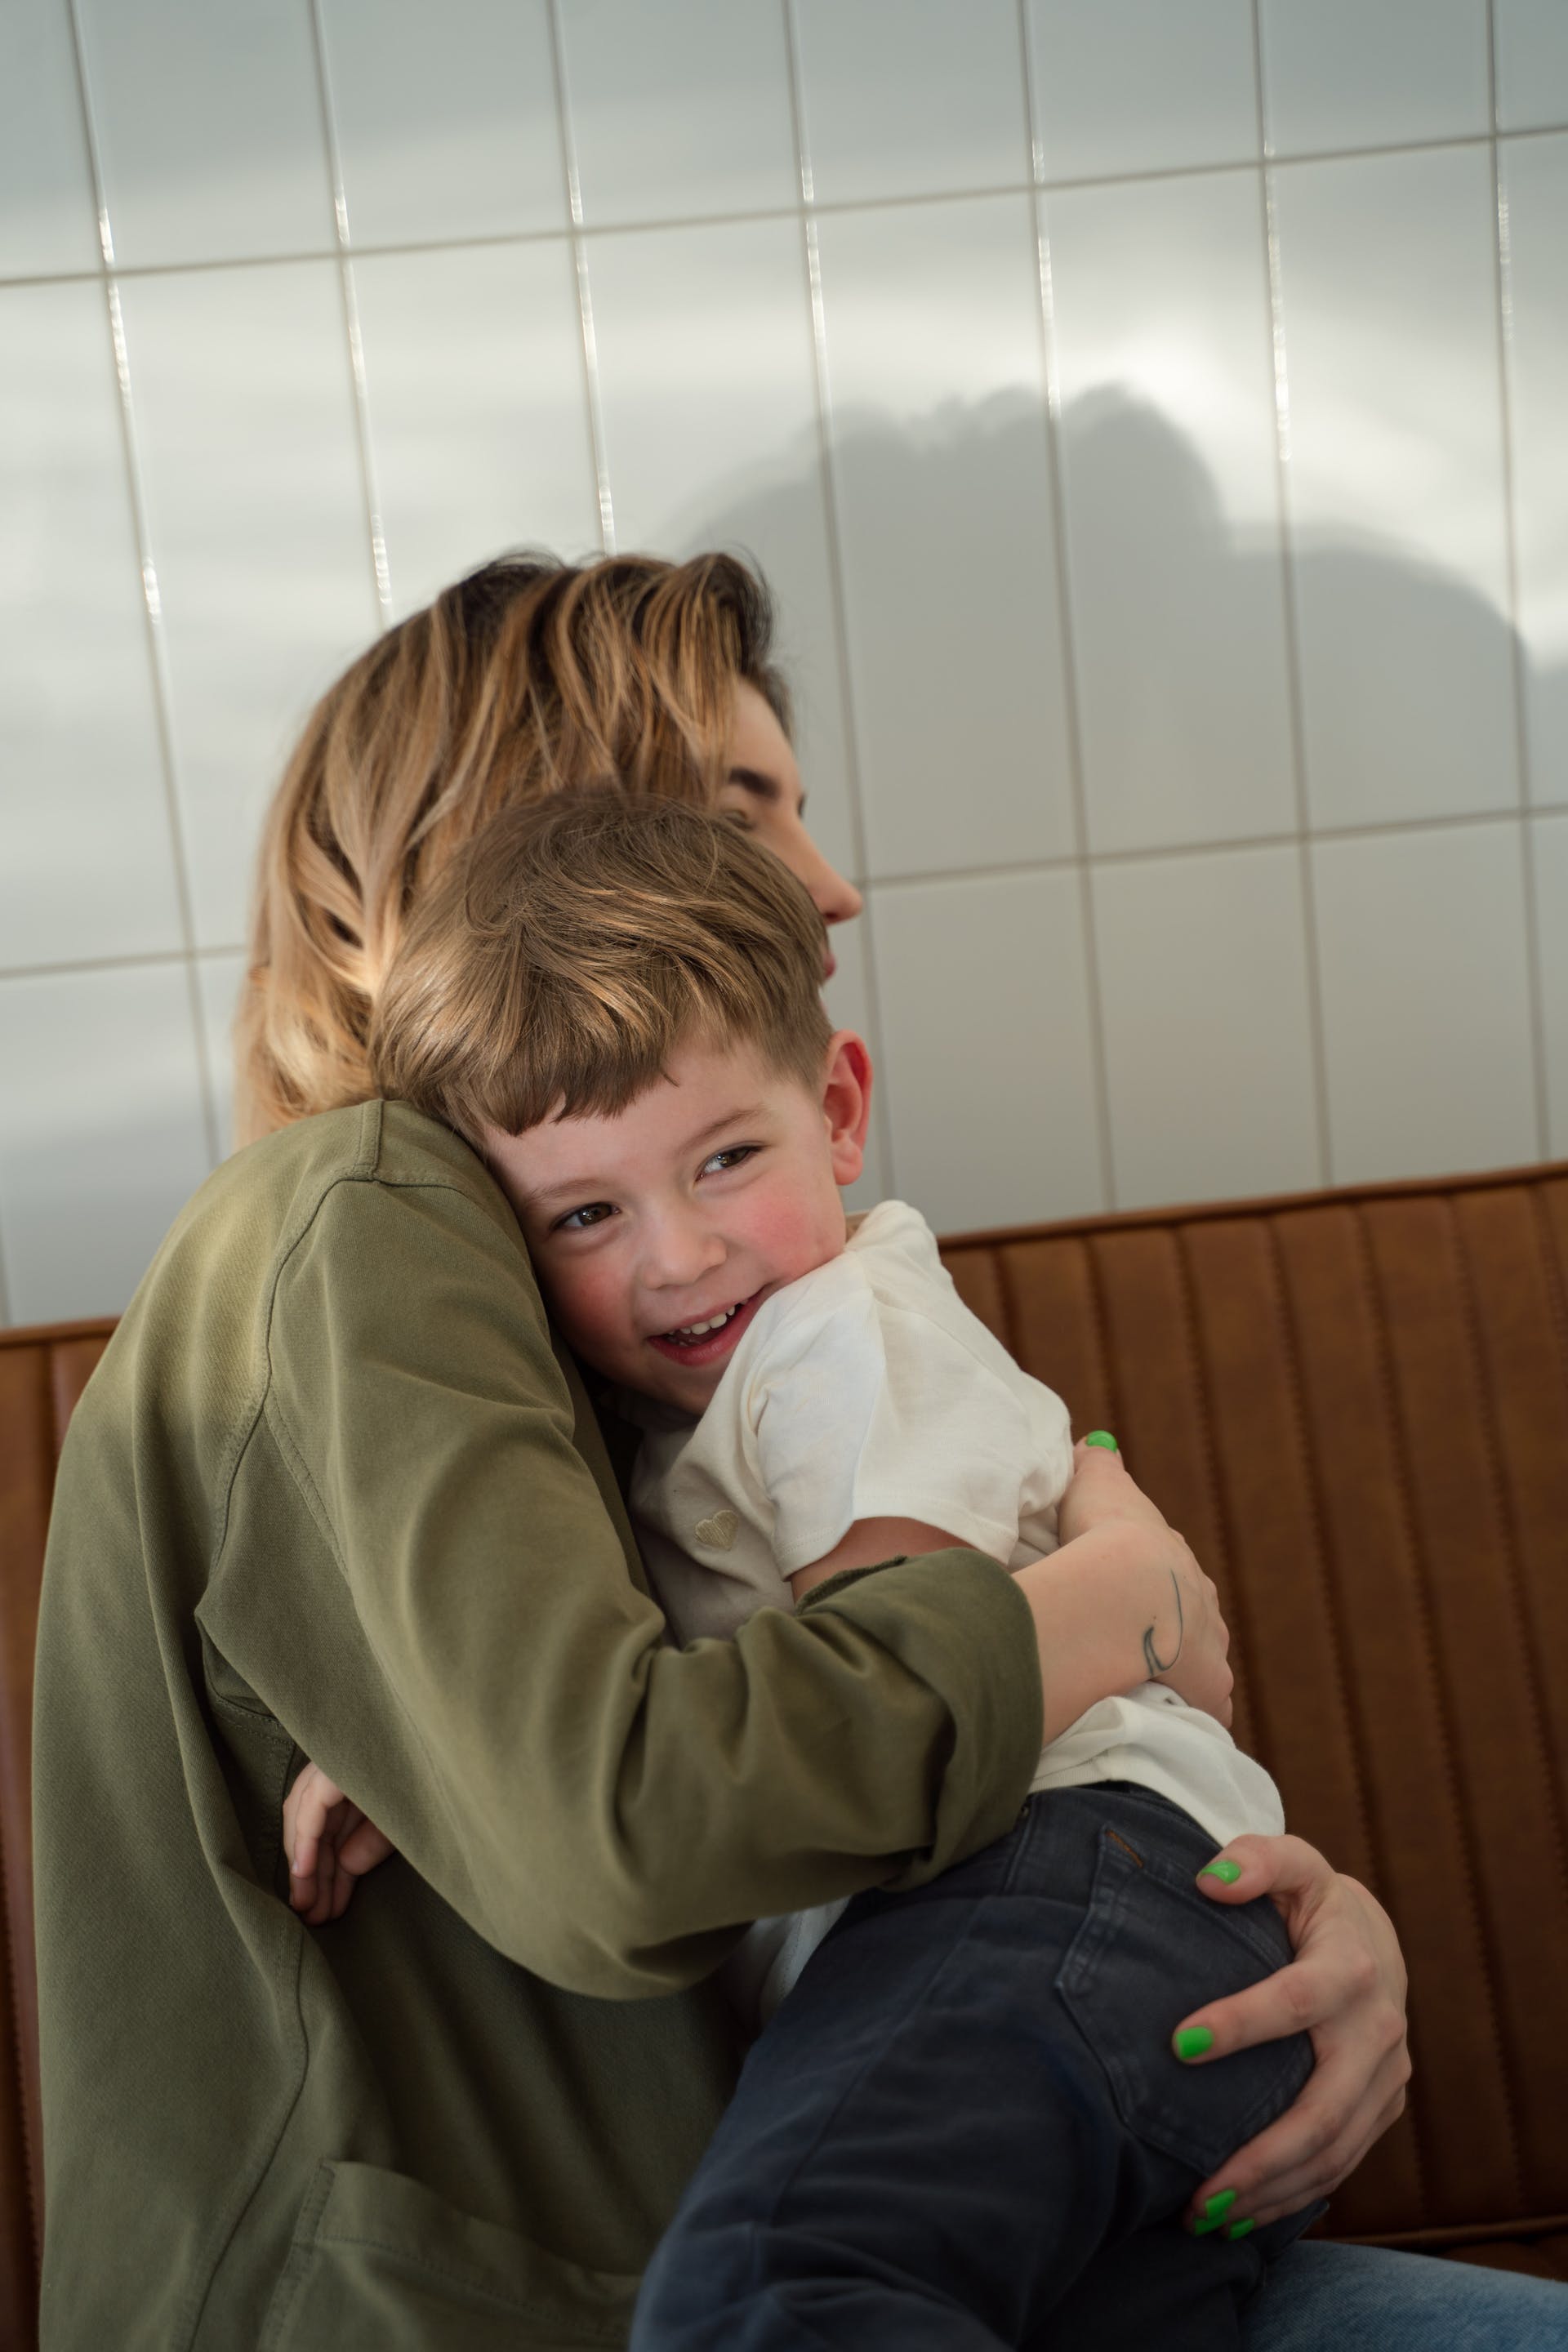 A mother hugging her son | Source: Pexels